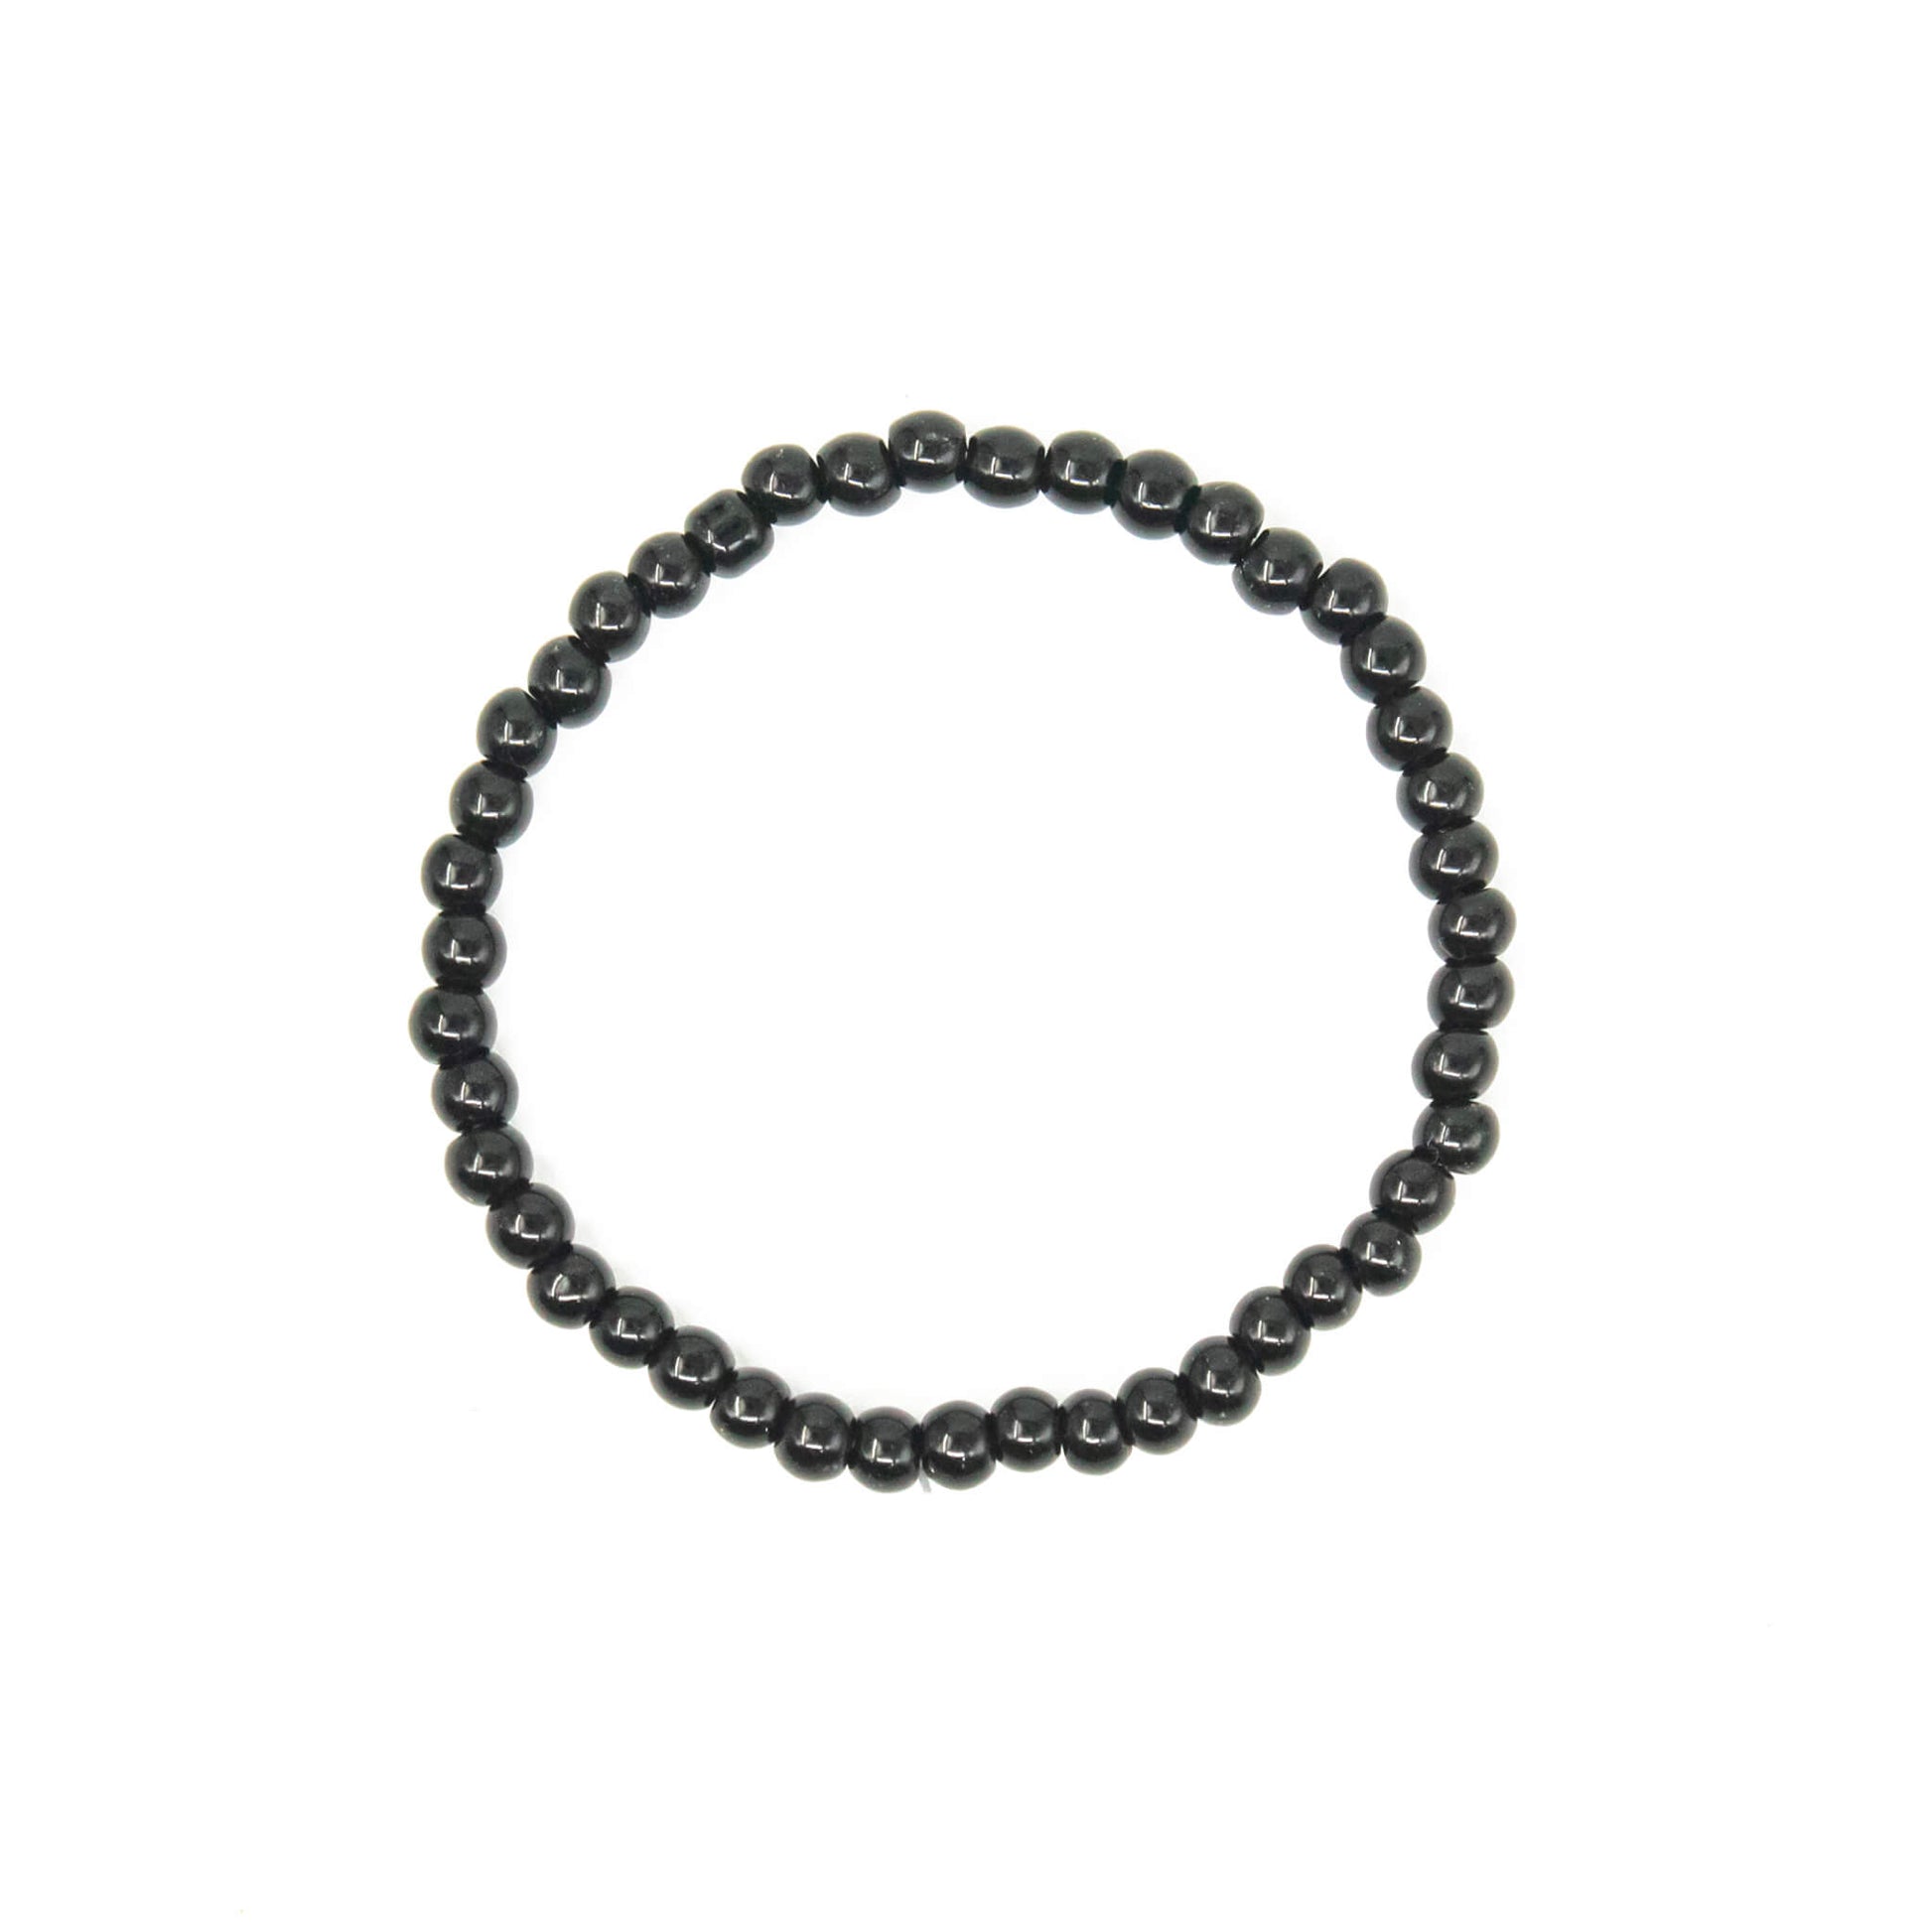 black tourmaline stone bracelet